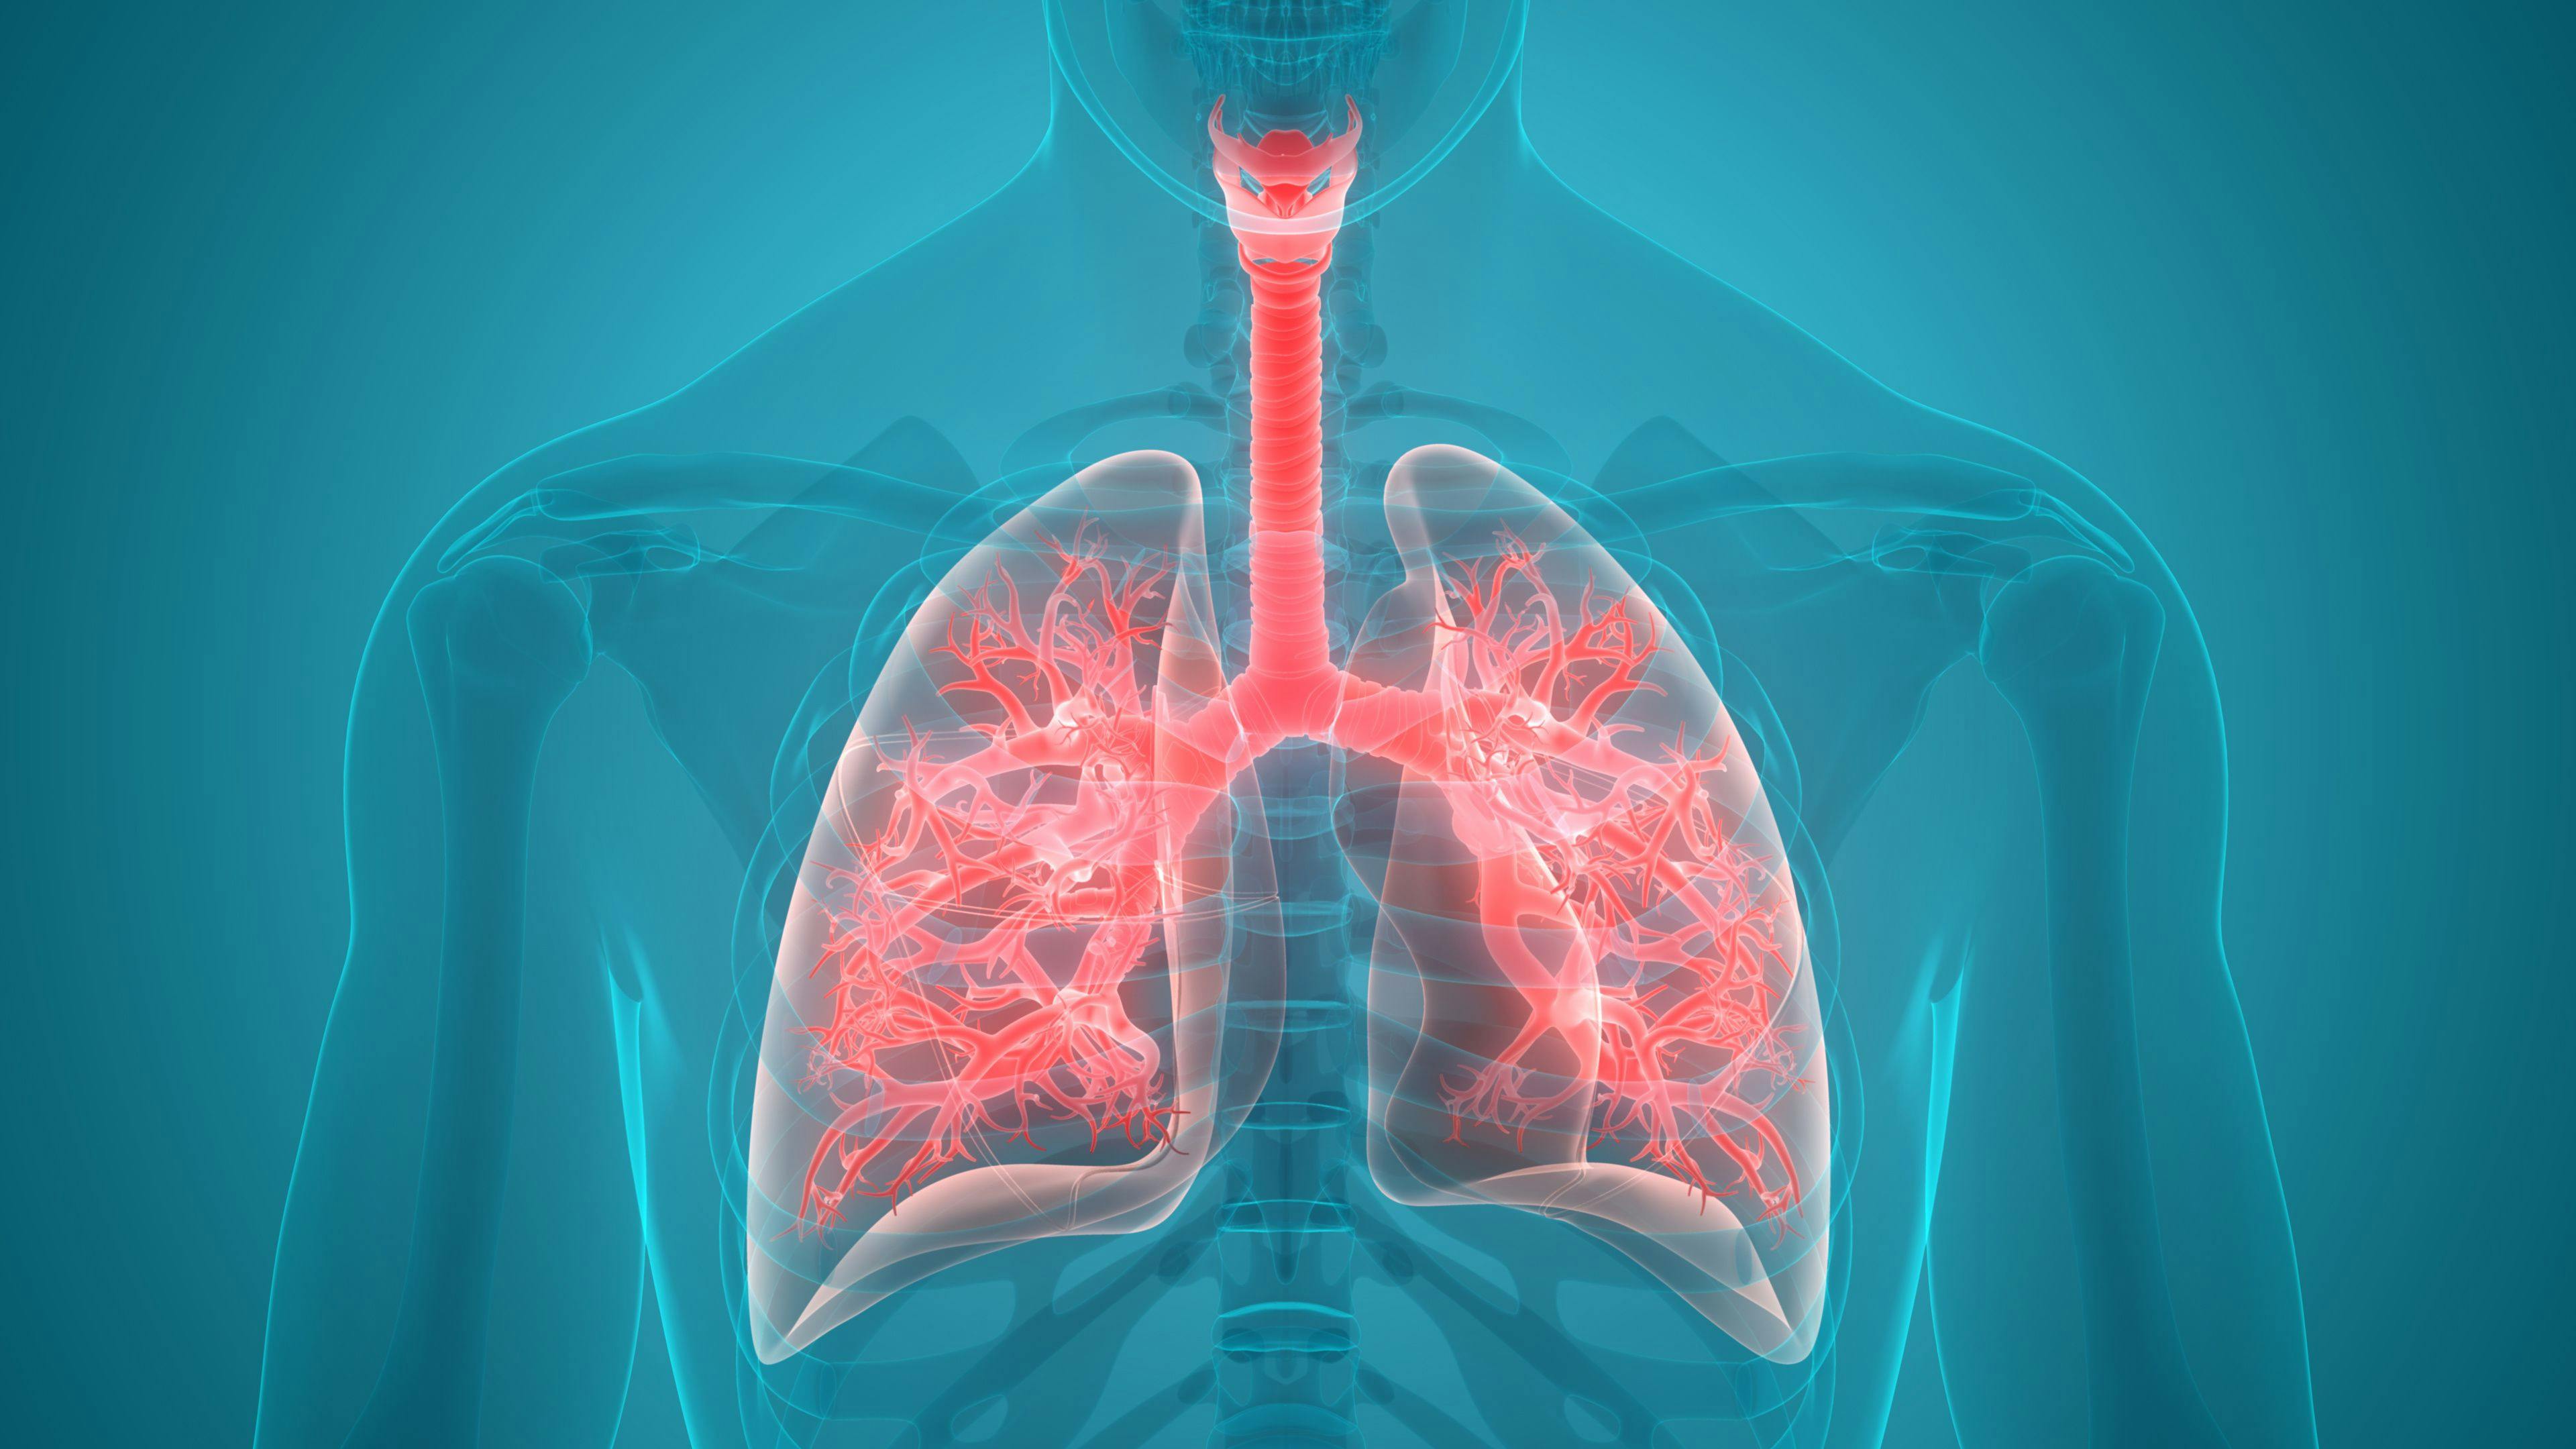 Human Respiratory System Anatomy | Image Credit: magicmine - stock.adobe.com